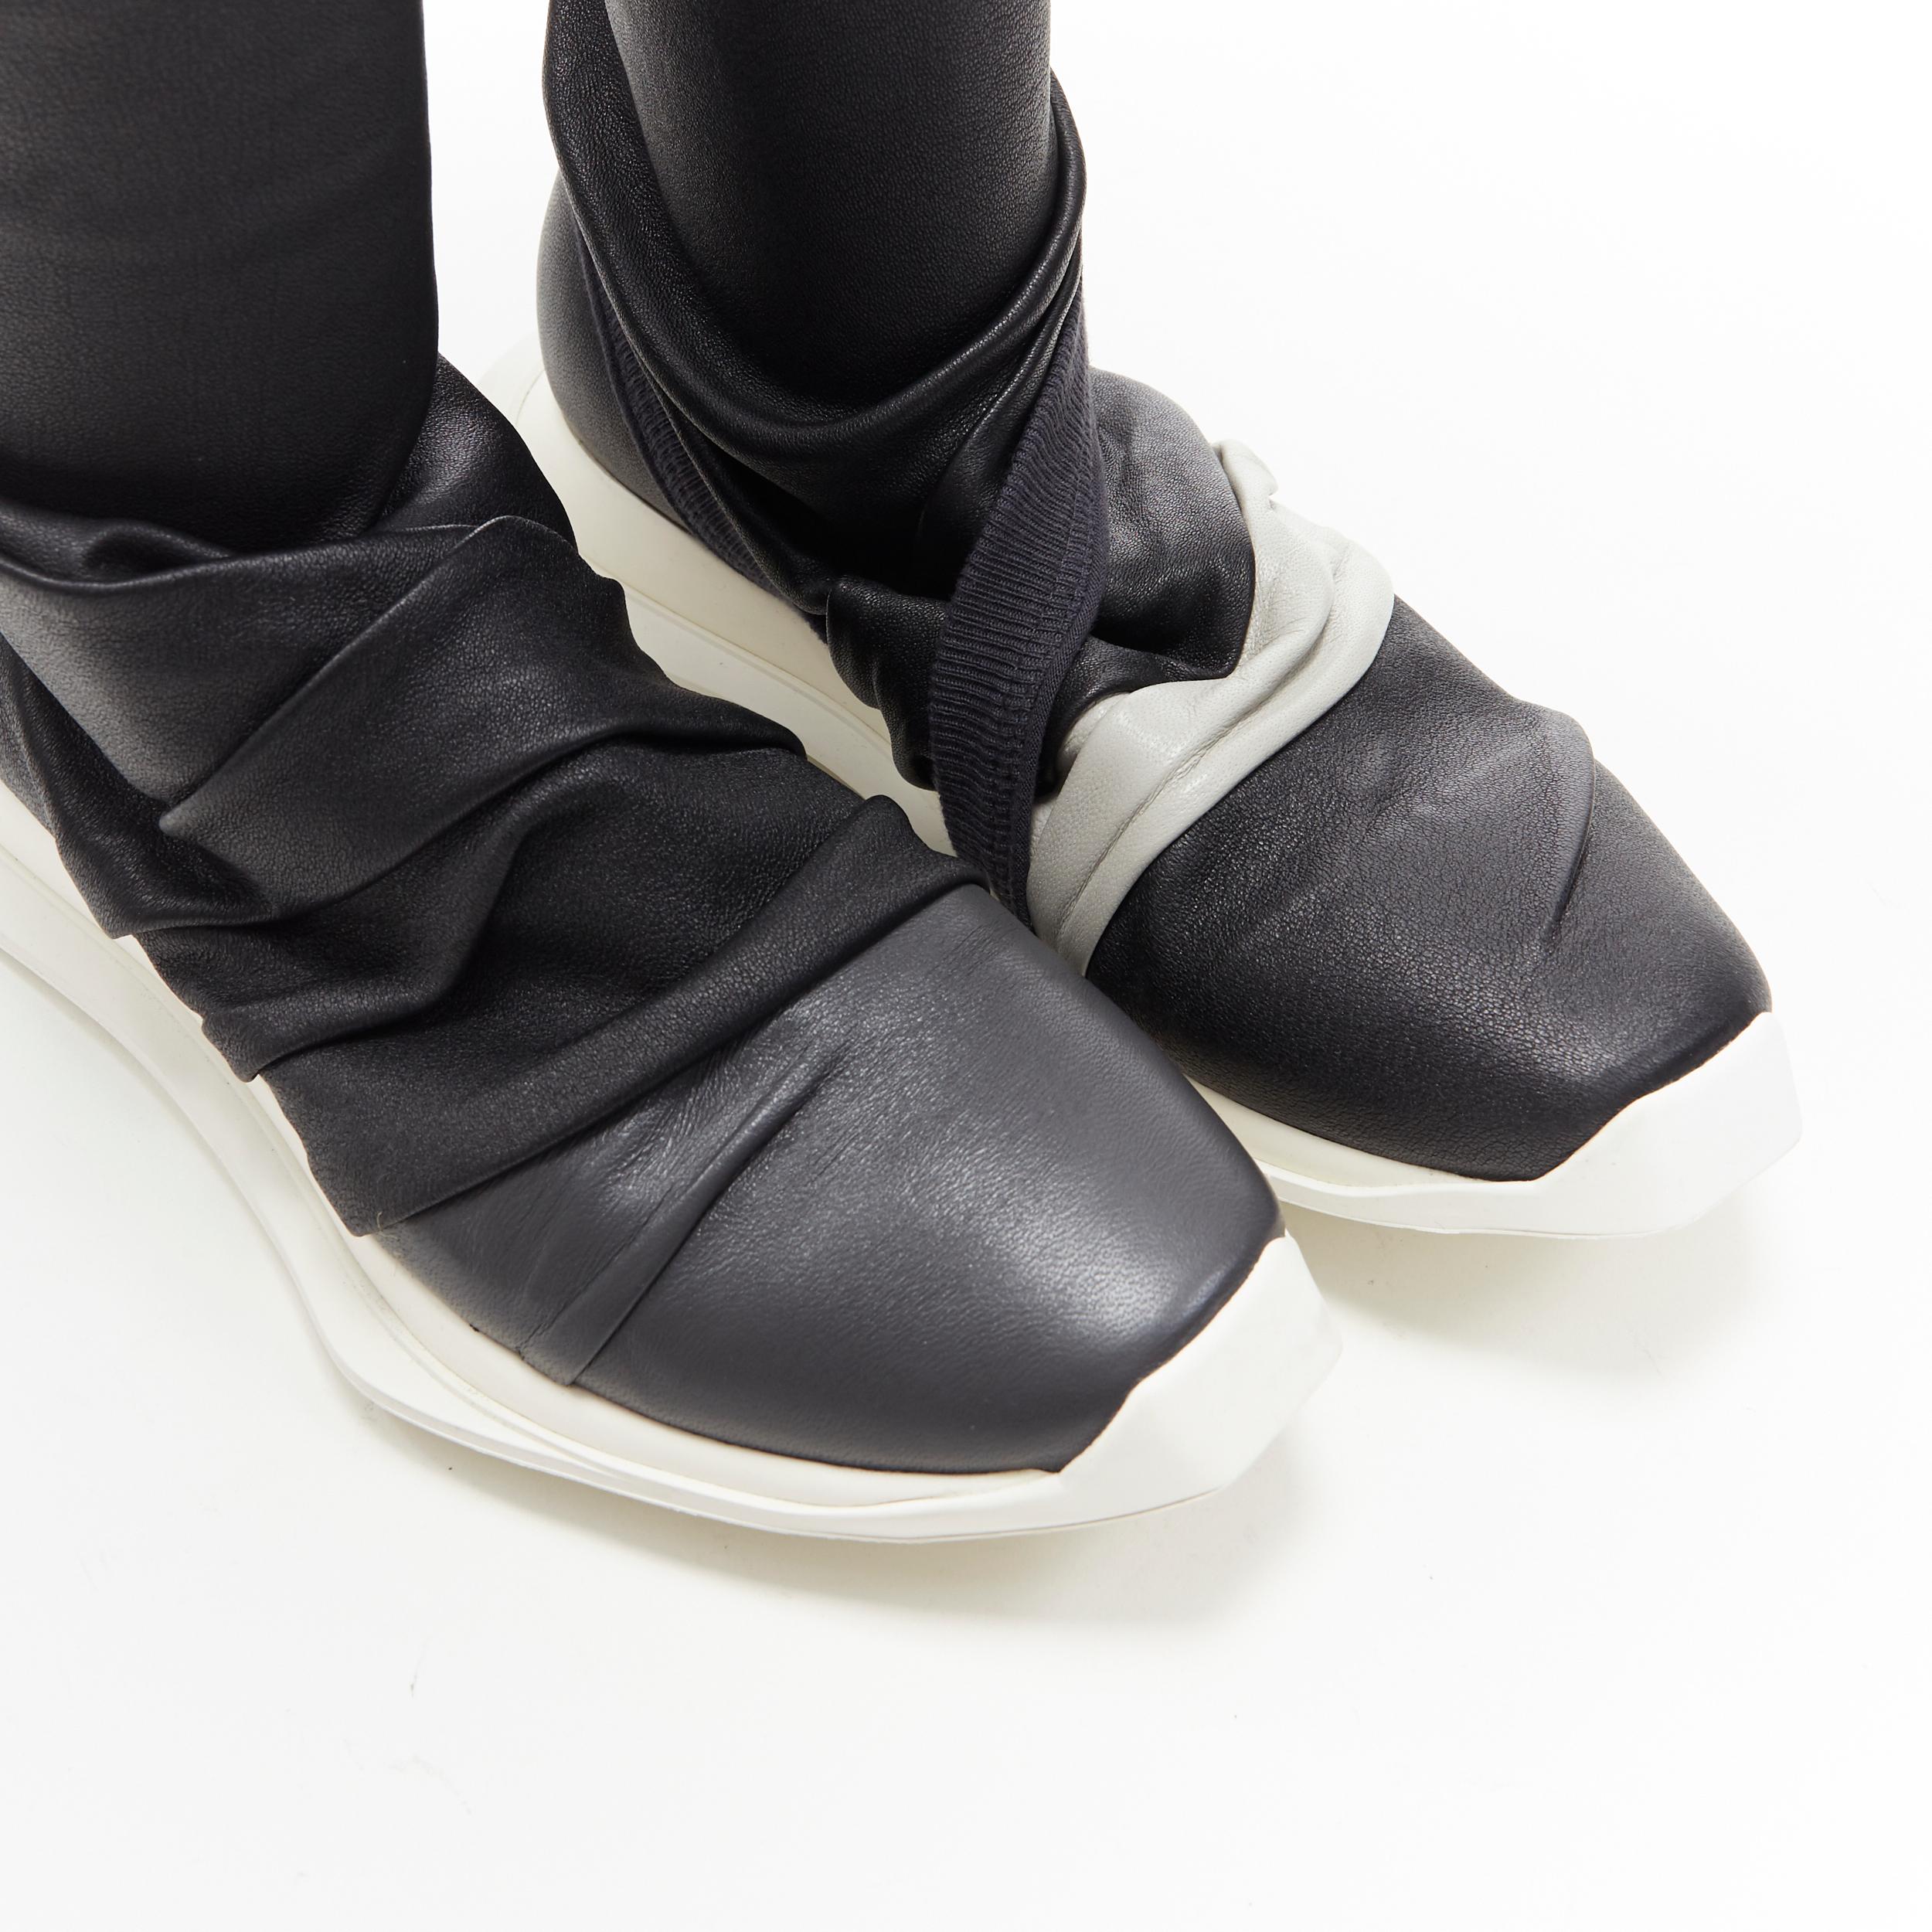 Women's new RICK OWENS Draped Olique Runner Stocking black knee high sneaker boots EU37